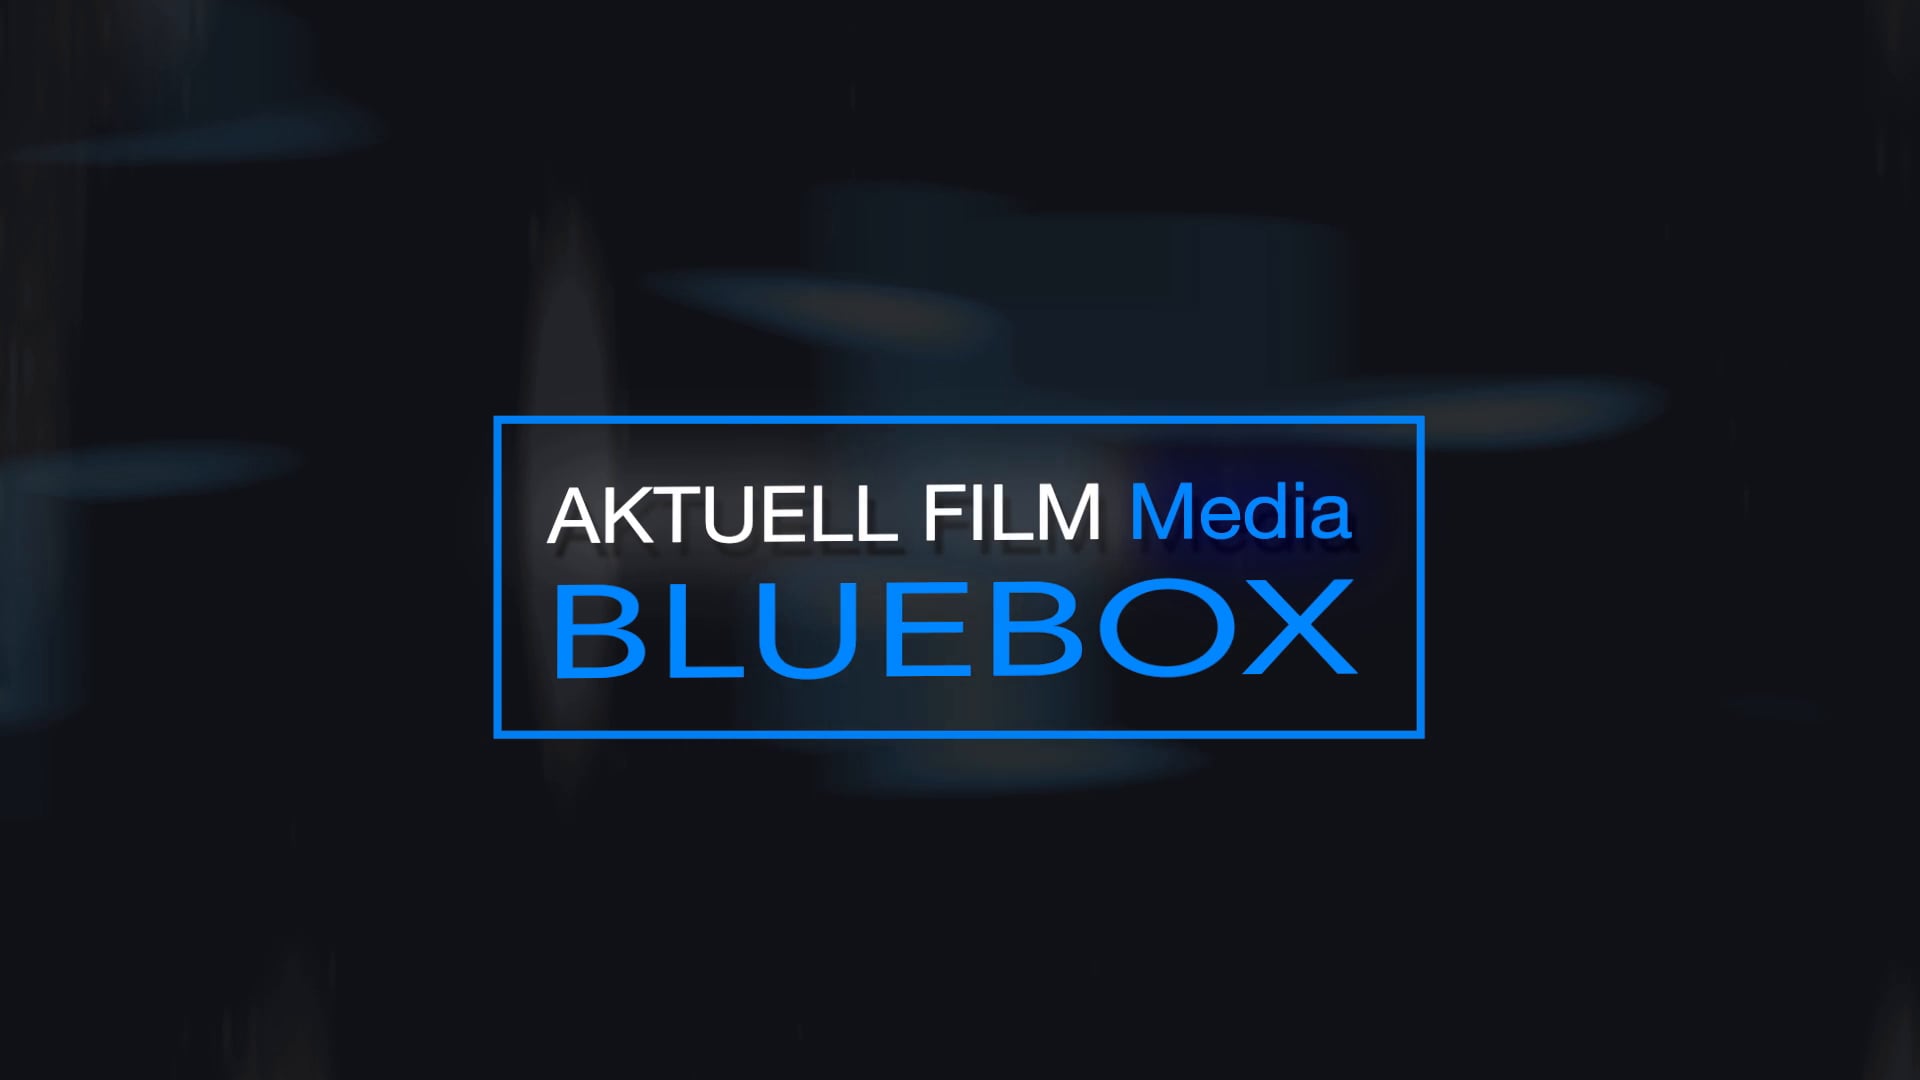 AKTUELL FILM Media - BLUEBOX